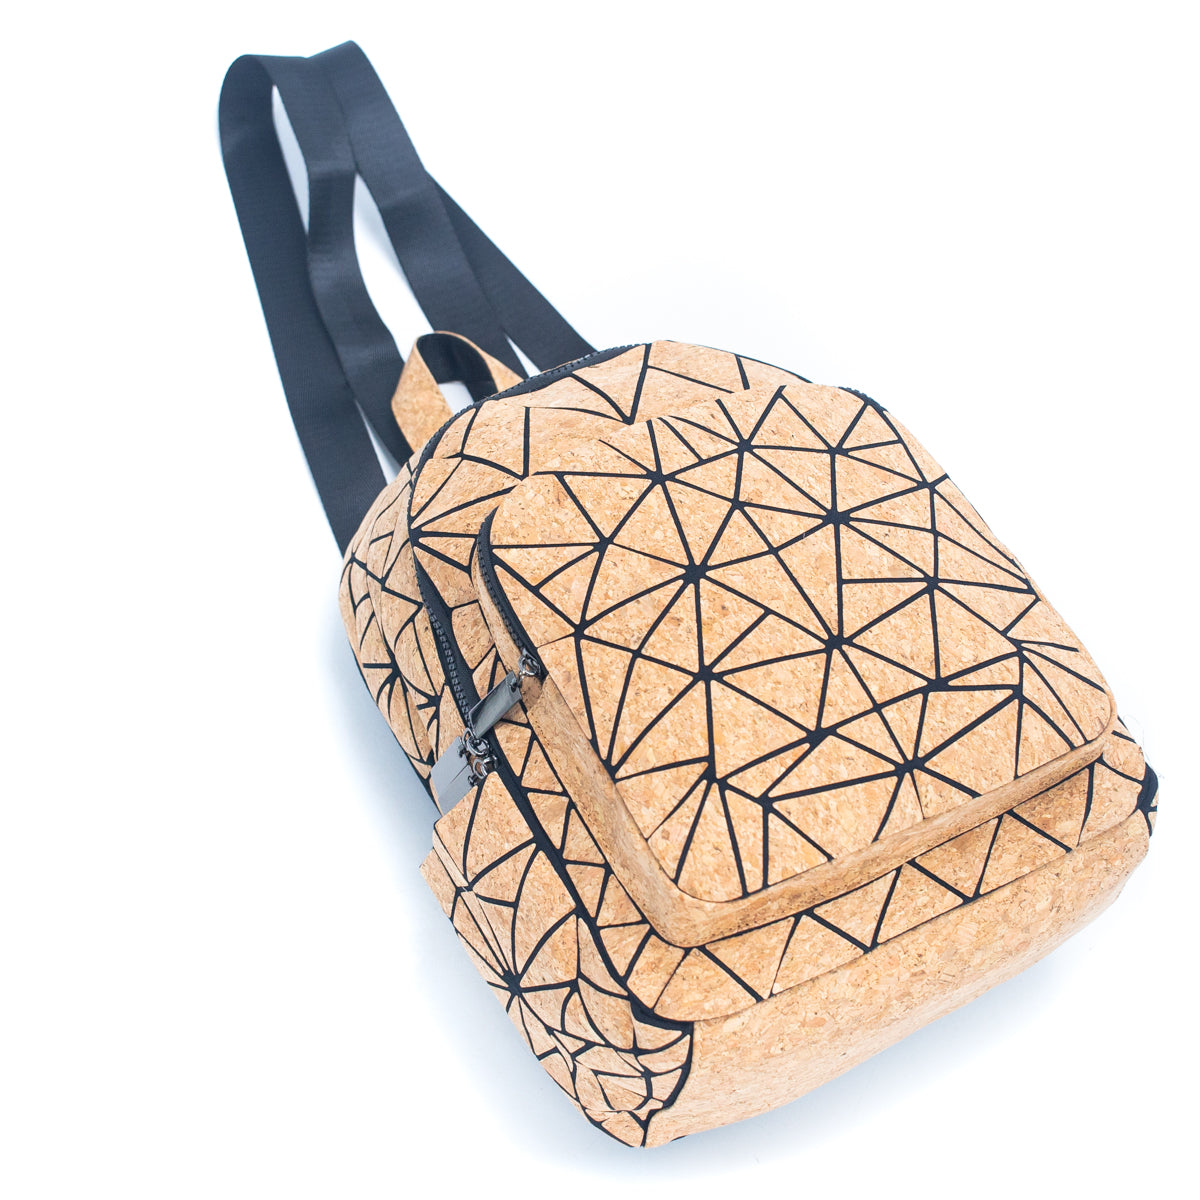 Compact Web Cork Backpack